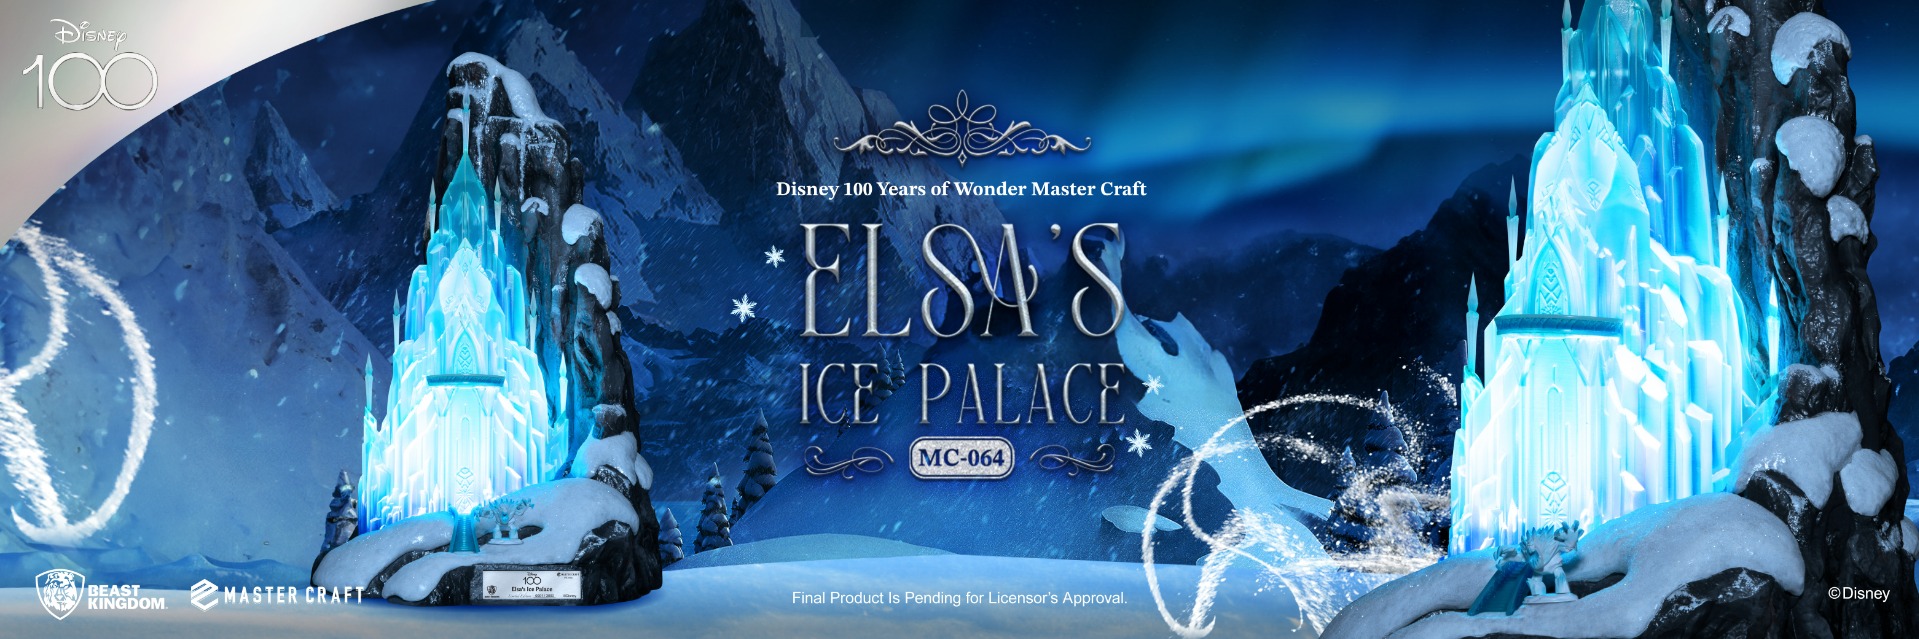 MC-064 Disney 100 Years of Wonder Master Craft Elsa's Ice Palace